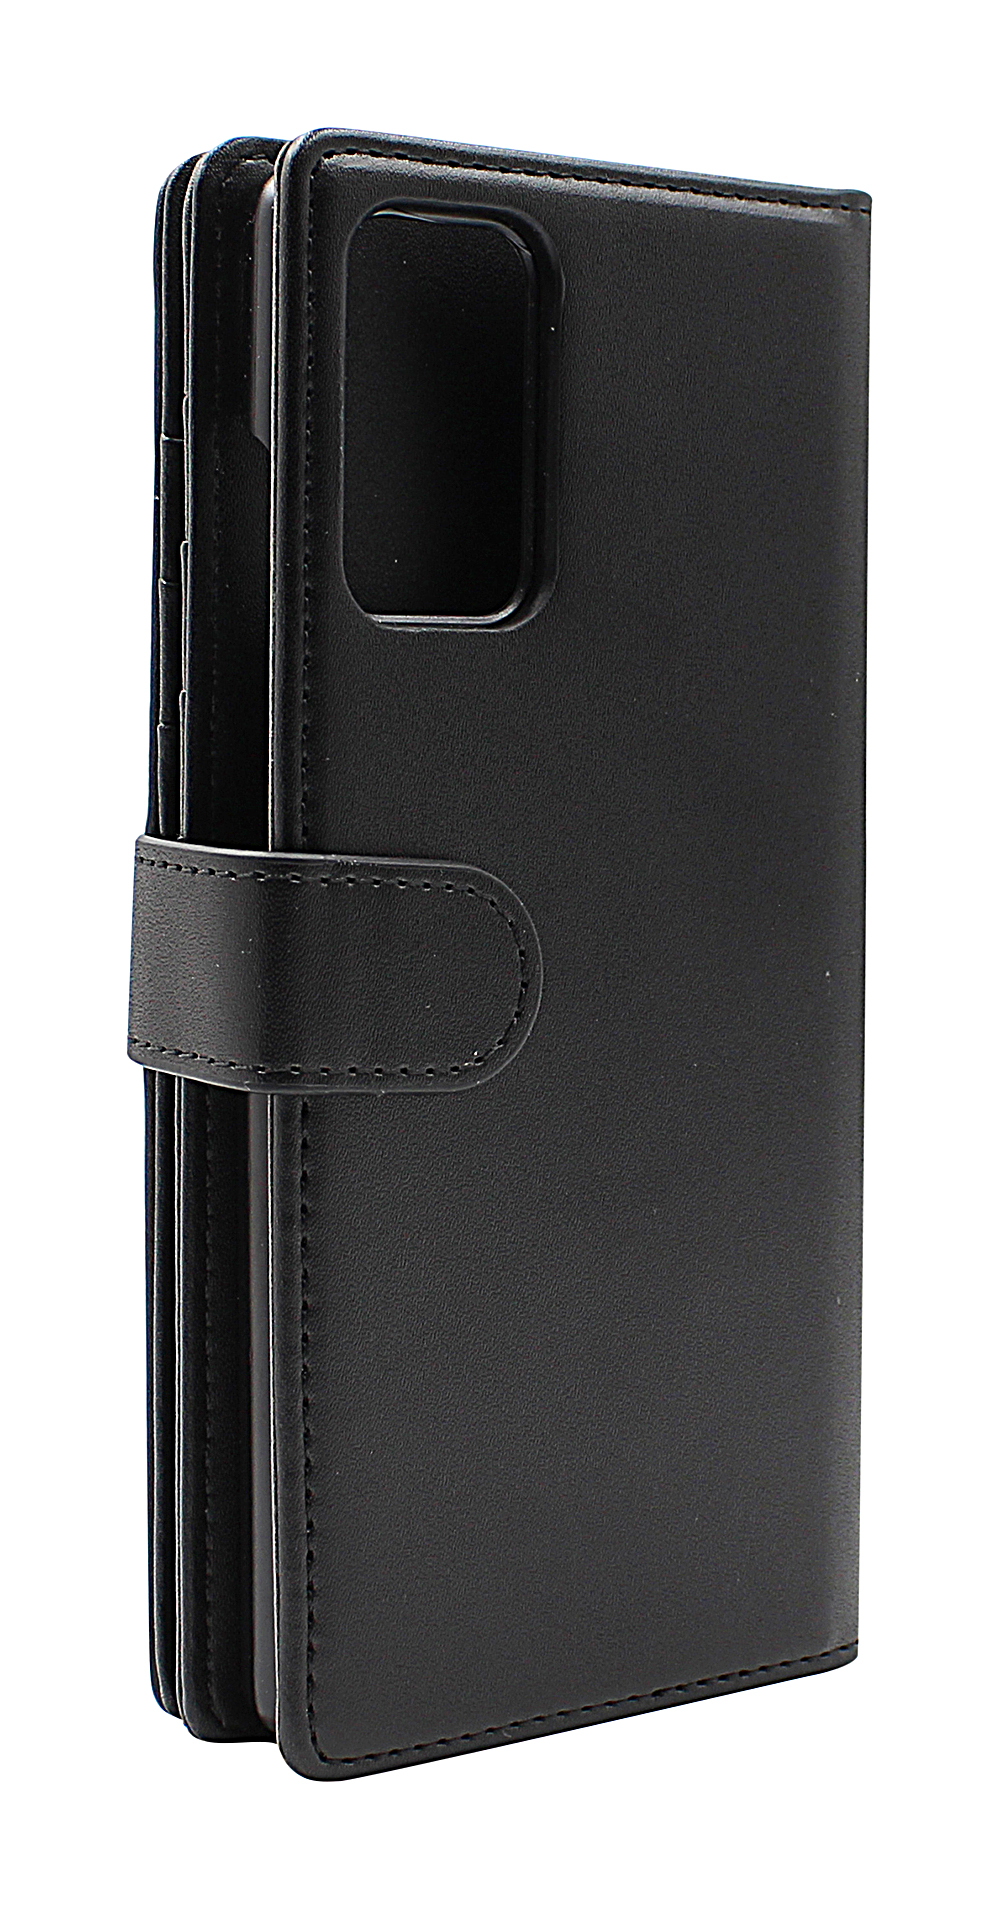 Skimblocker XL Wallet Samsung Galaxy Note 20 5G